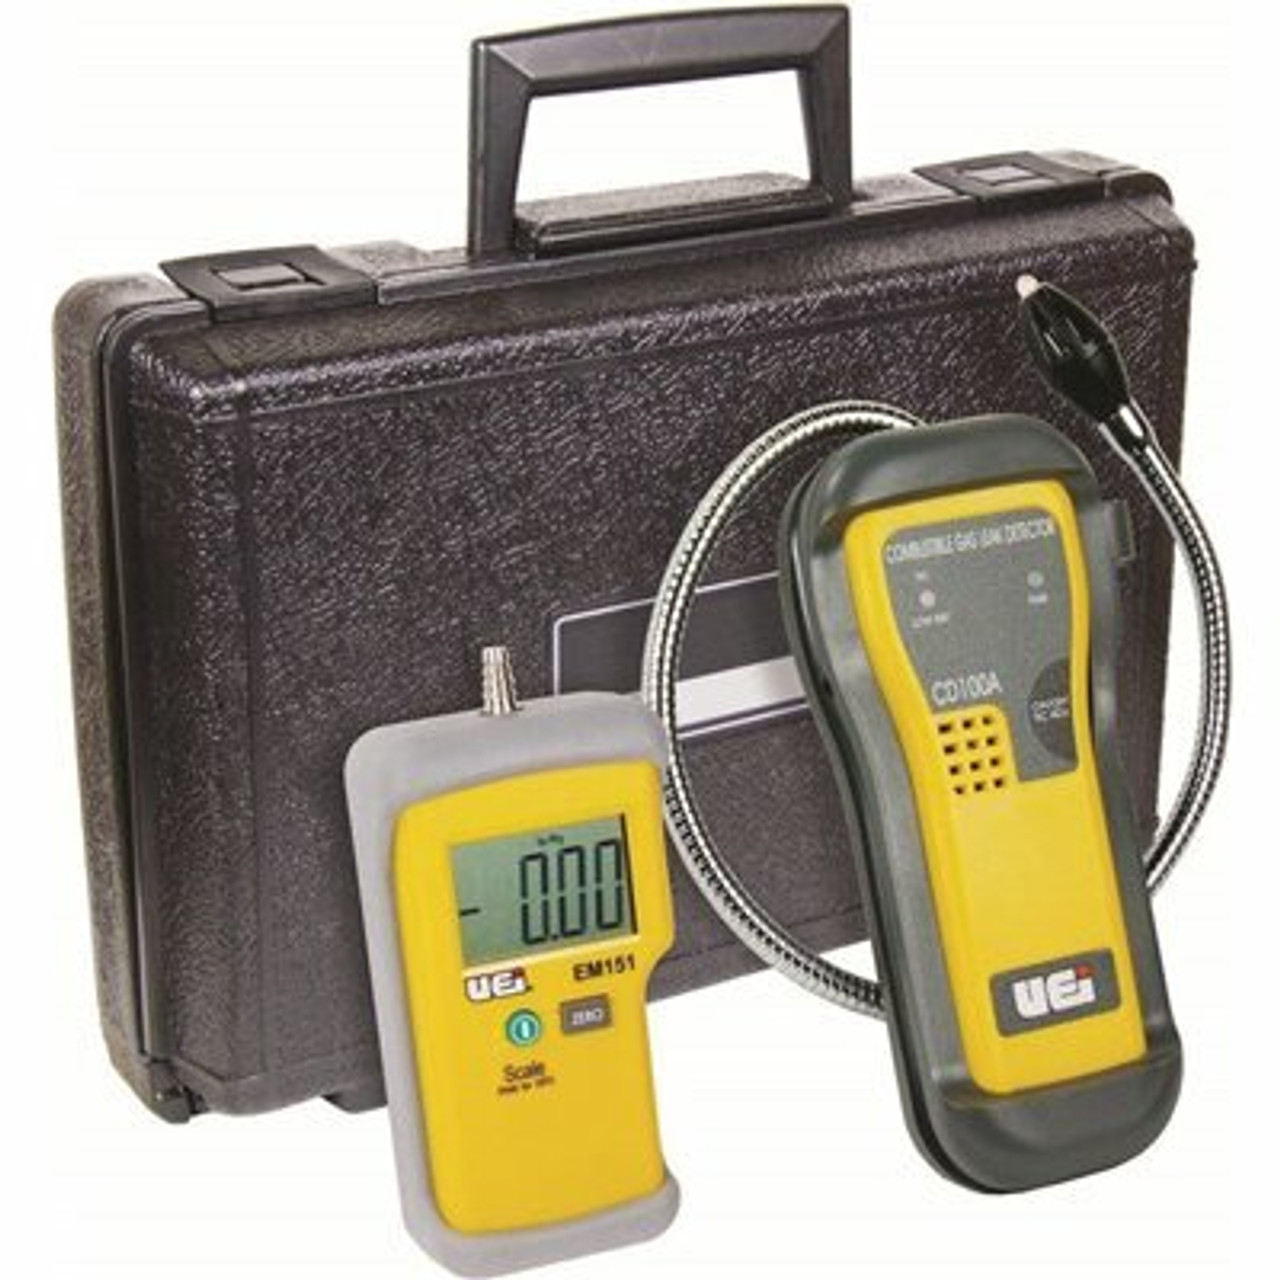 Uei Test Instruments Leak And Pressure Test Kit Nist Calibrated